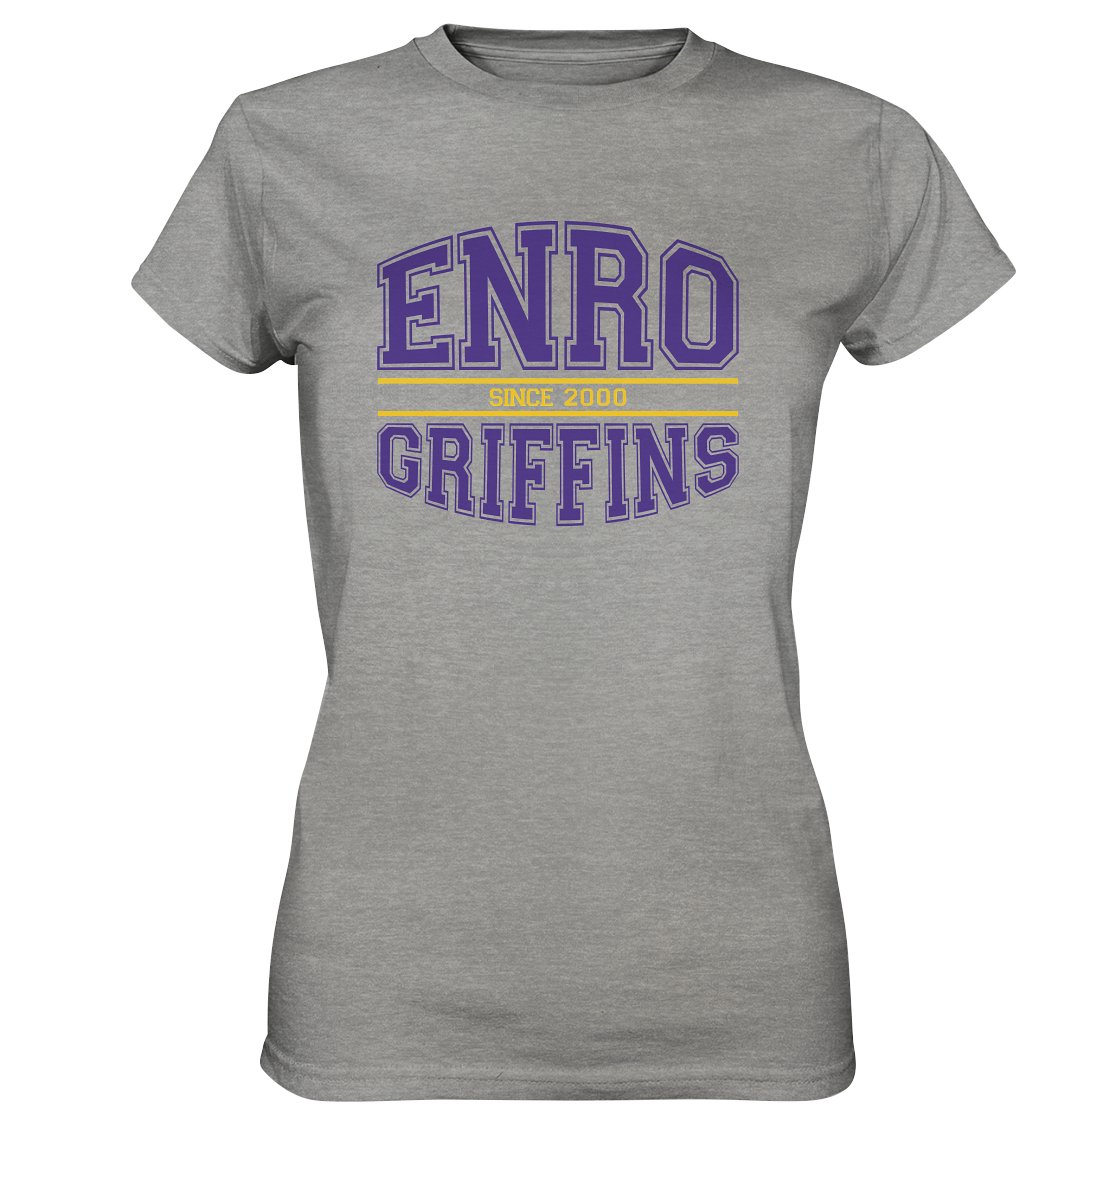 ENRO GRIFFINS  - Ladies Basic Shirt